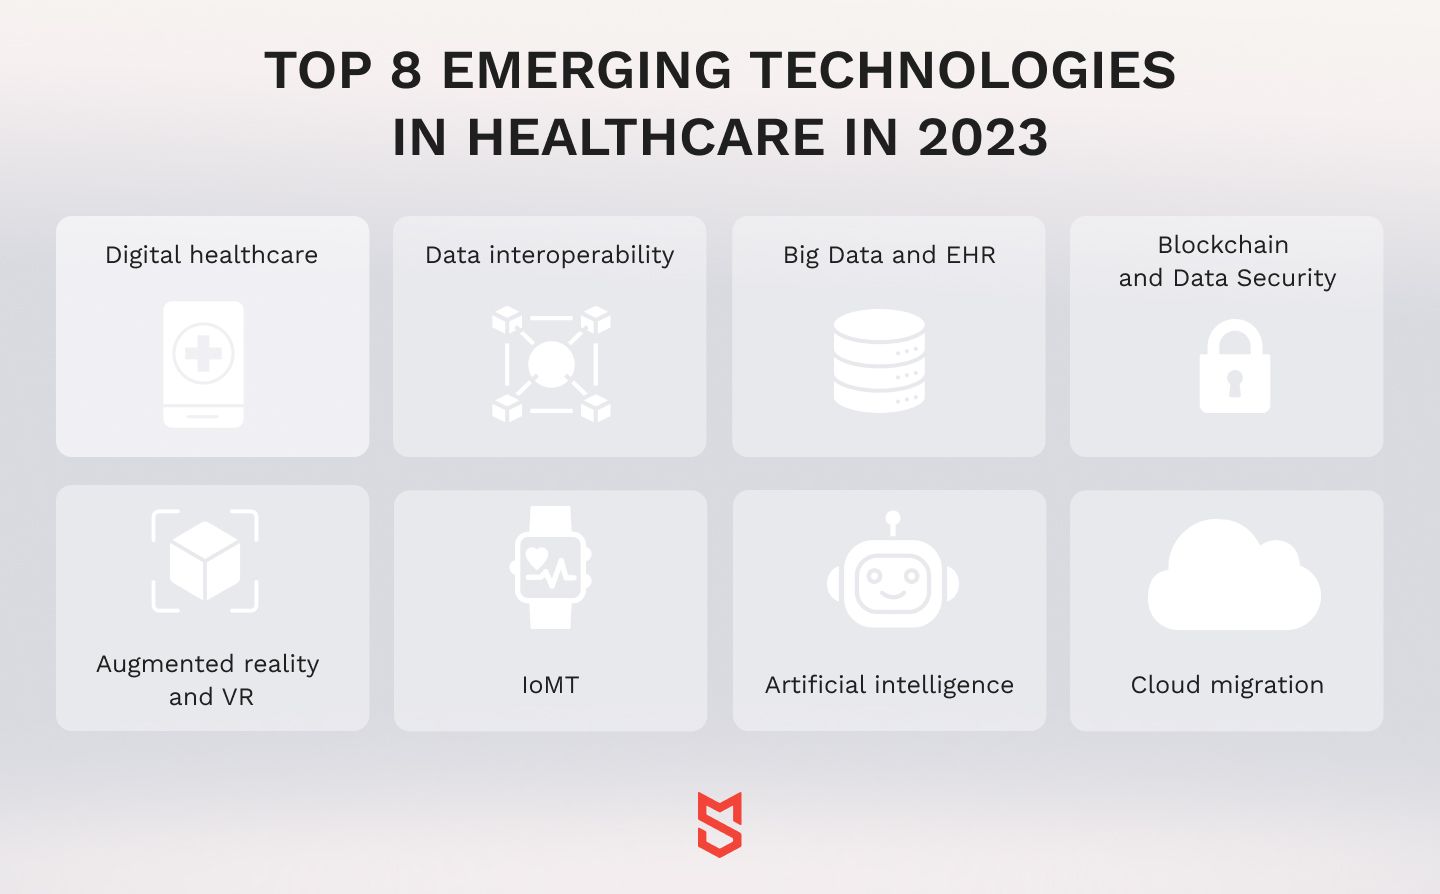 Top 8 emerging technologies in healthcare in 2023